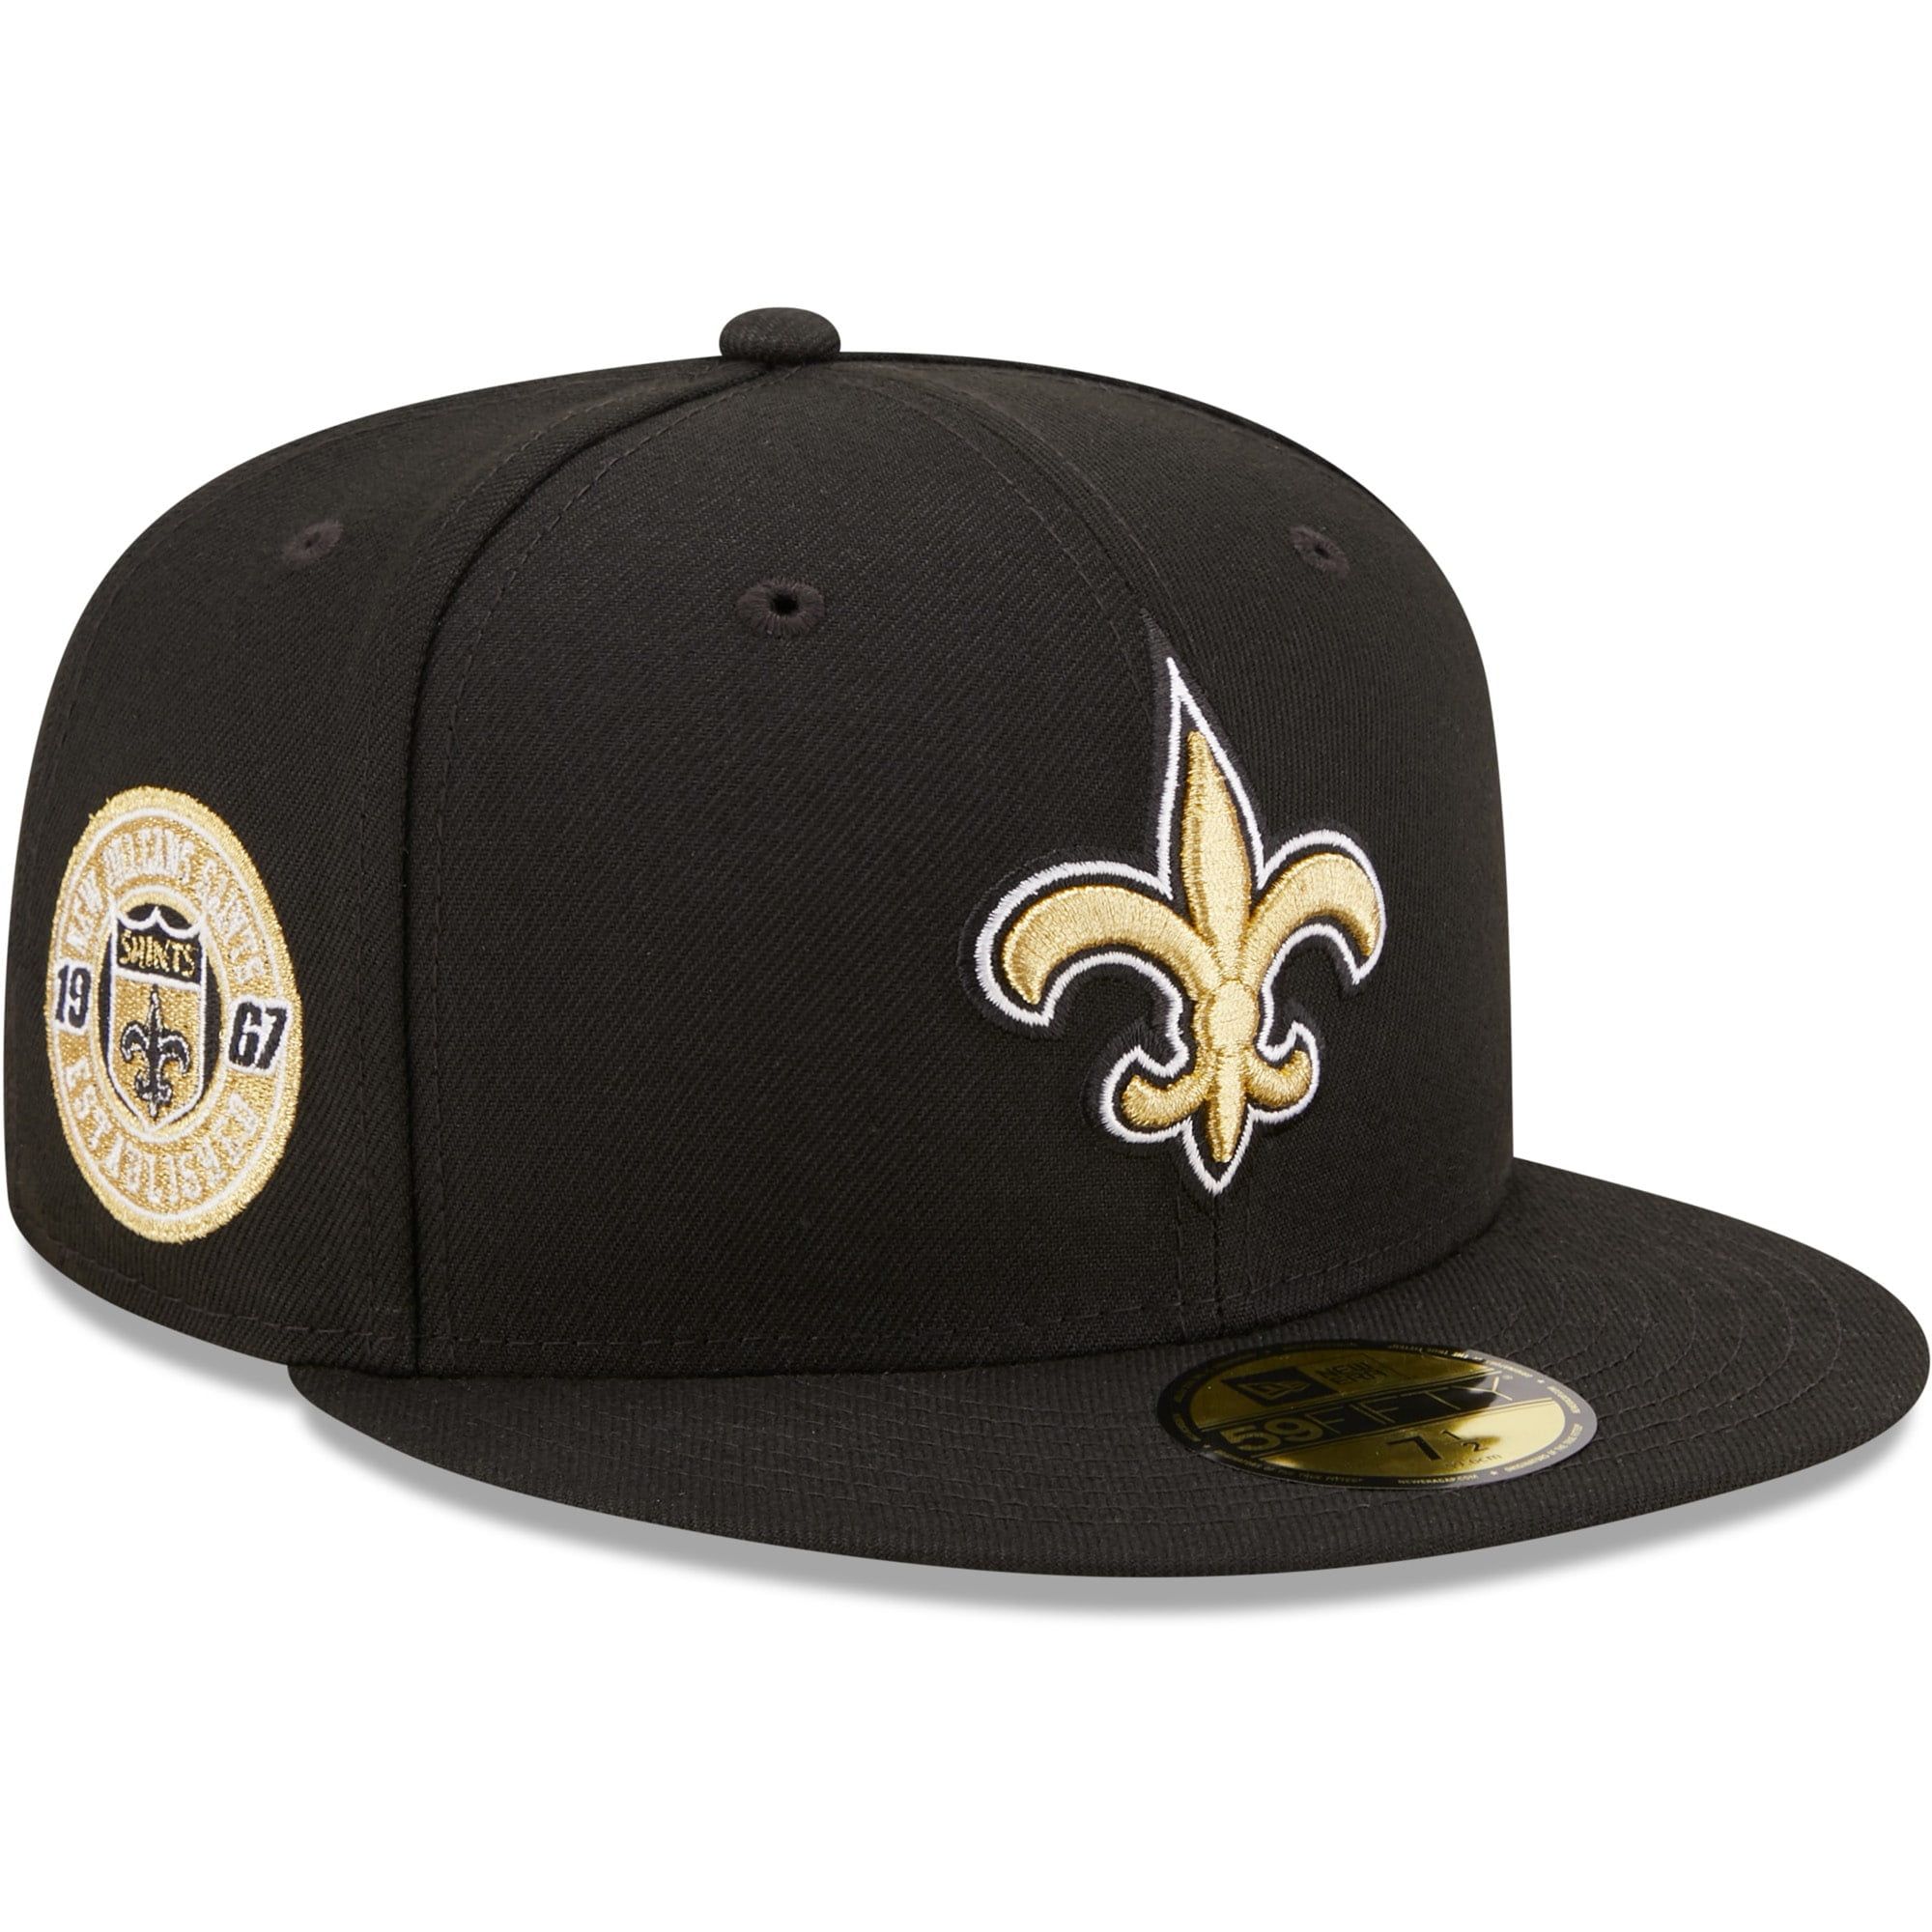 New Orleans Saints Hats - Walmart.com